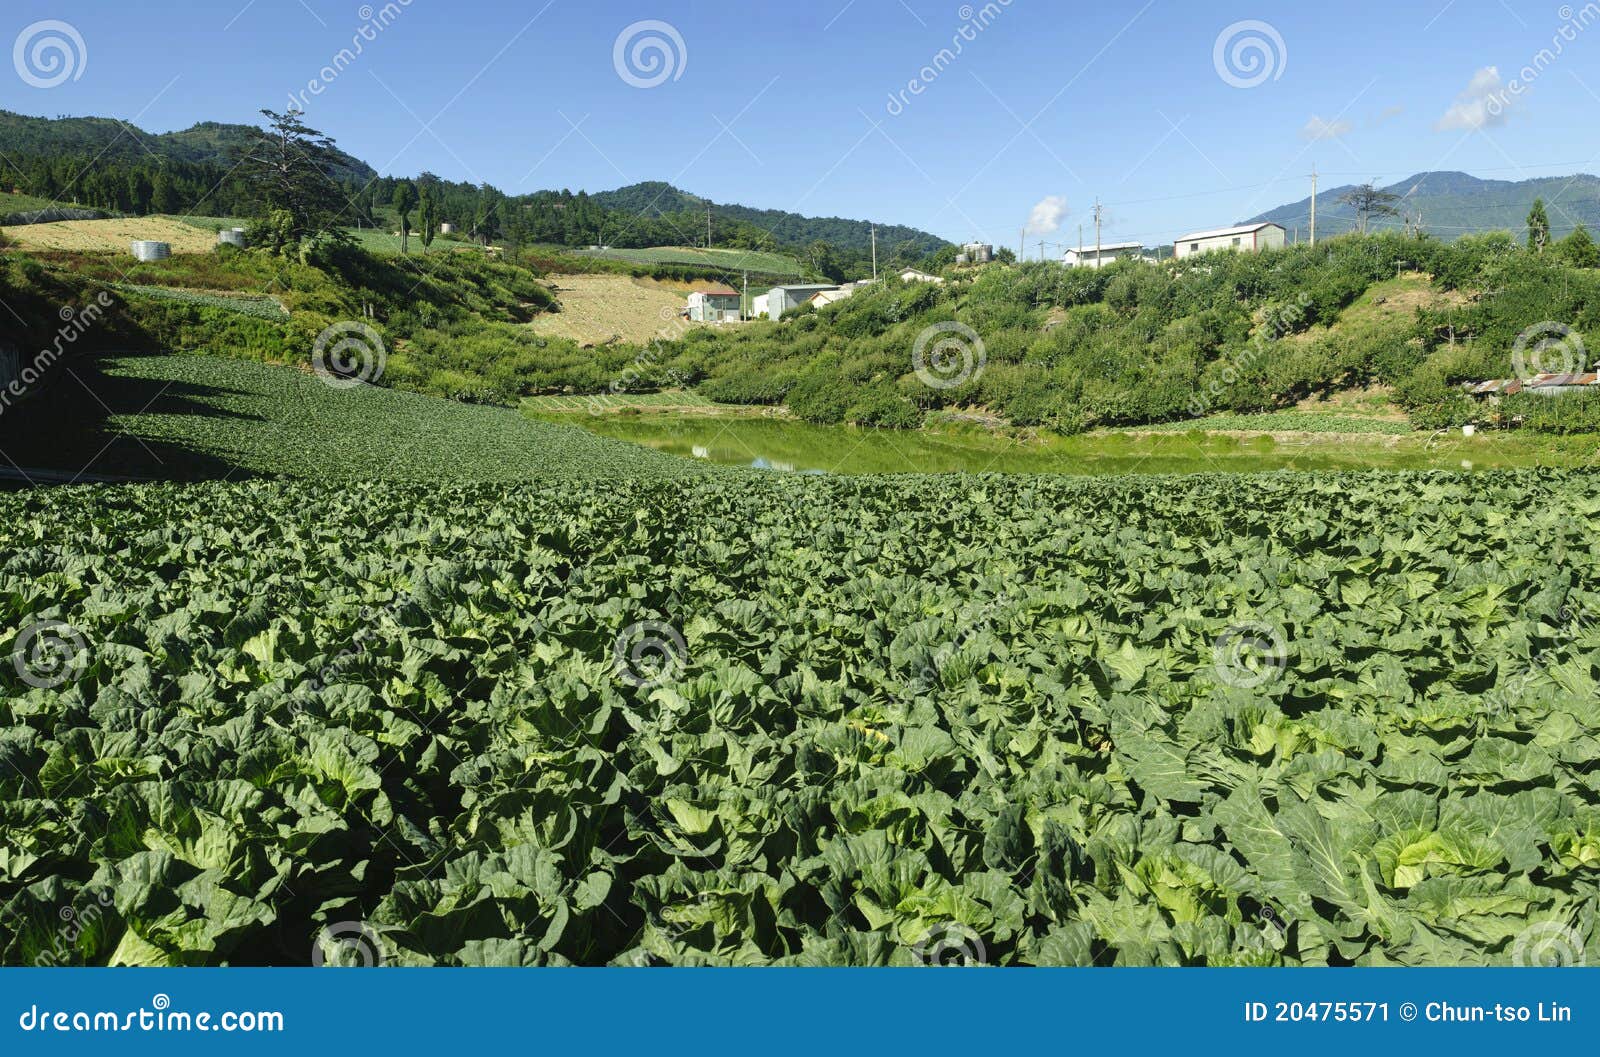 Panoramic views of beautiful vegetable farm. Panoramic views of beautiful vegetable farm in taiwan,asia.